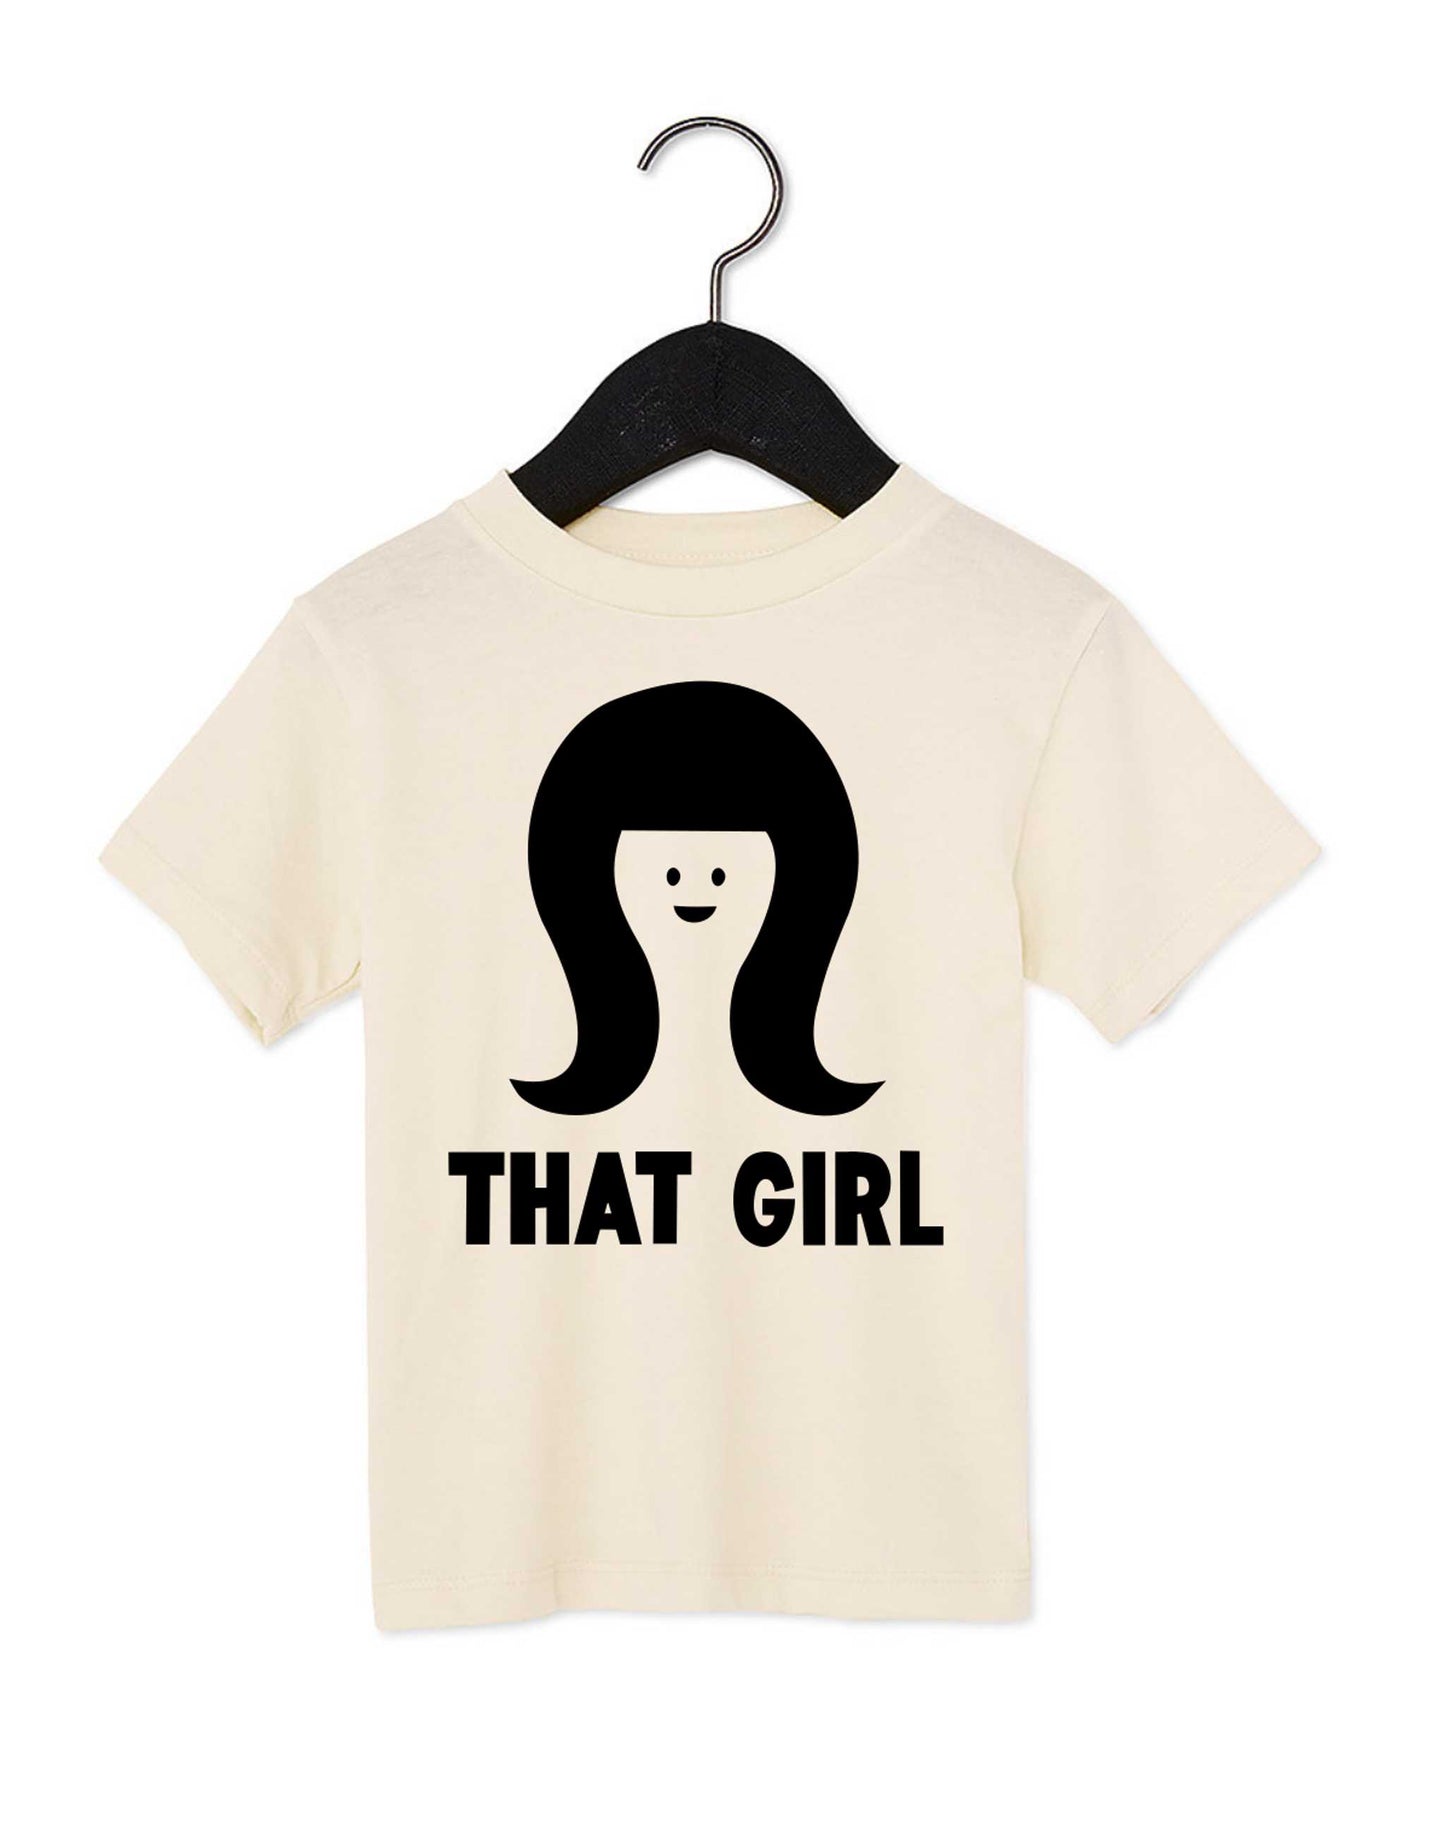 That Girl Kids T-Shirt